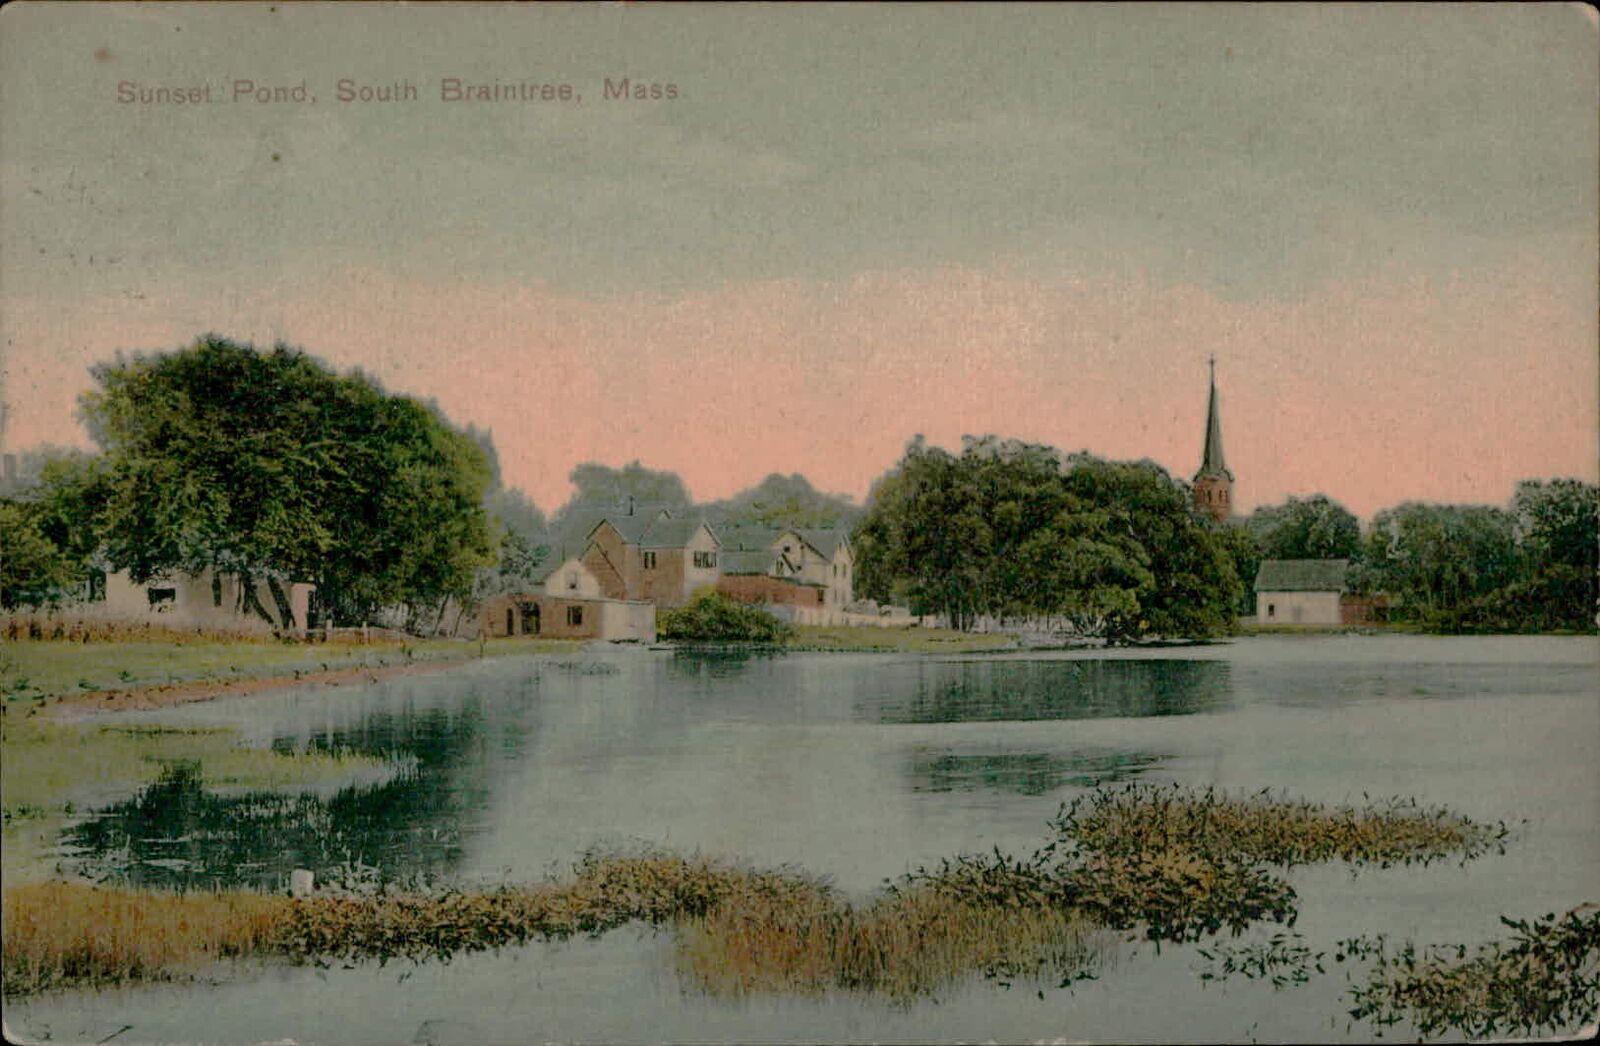 Postcard: Sunset Pond, South Braintree, Mass. HILI